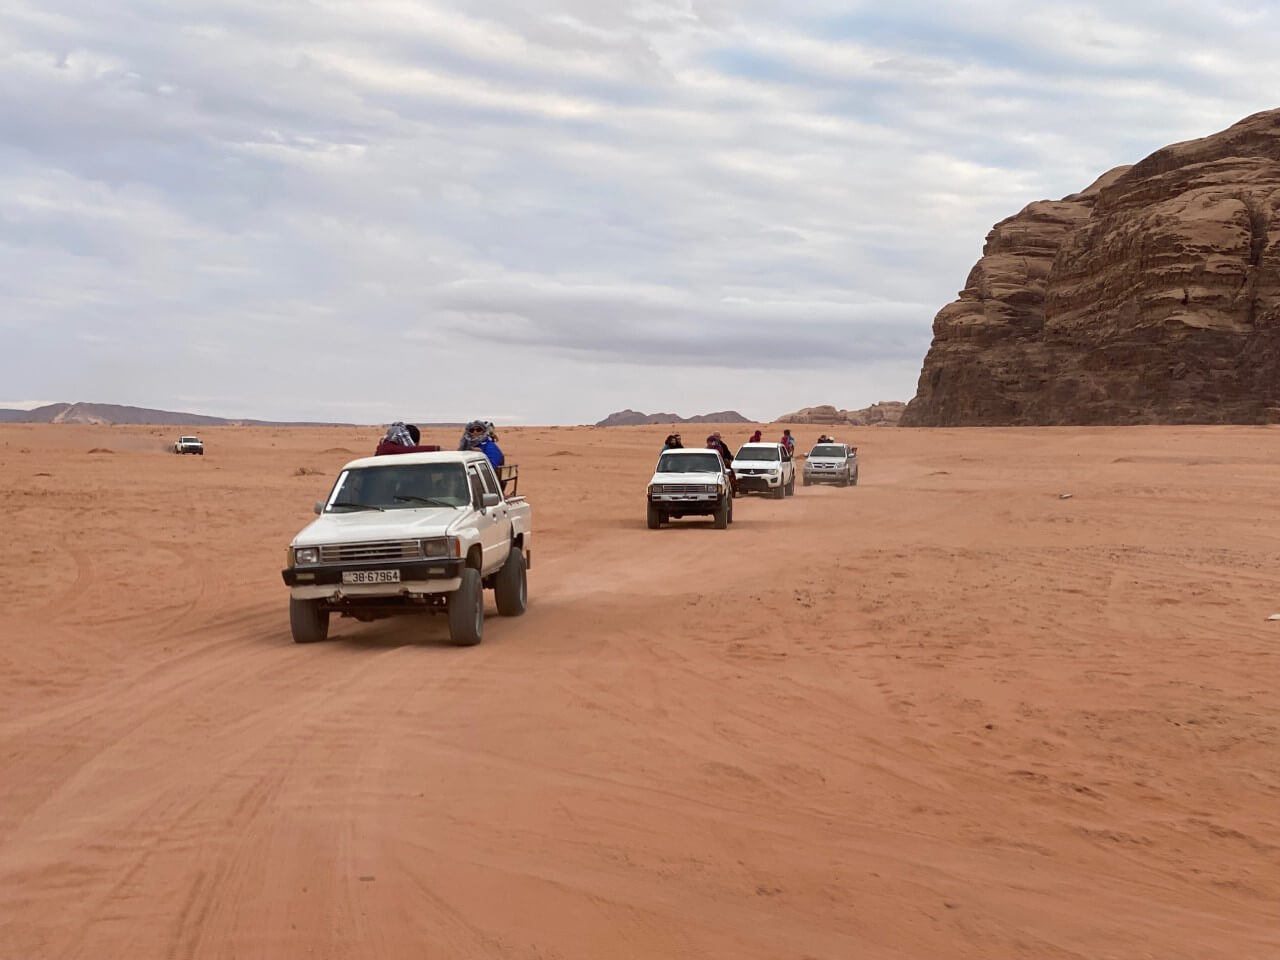 Rajd Jeepami po pustyni Wadi Rum